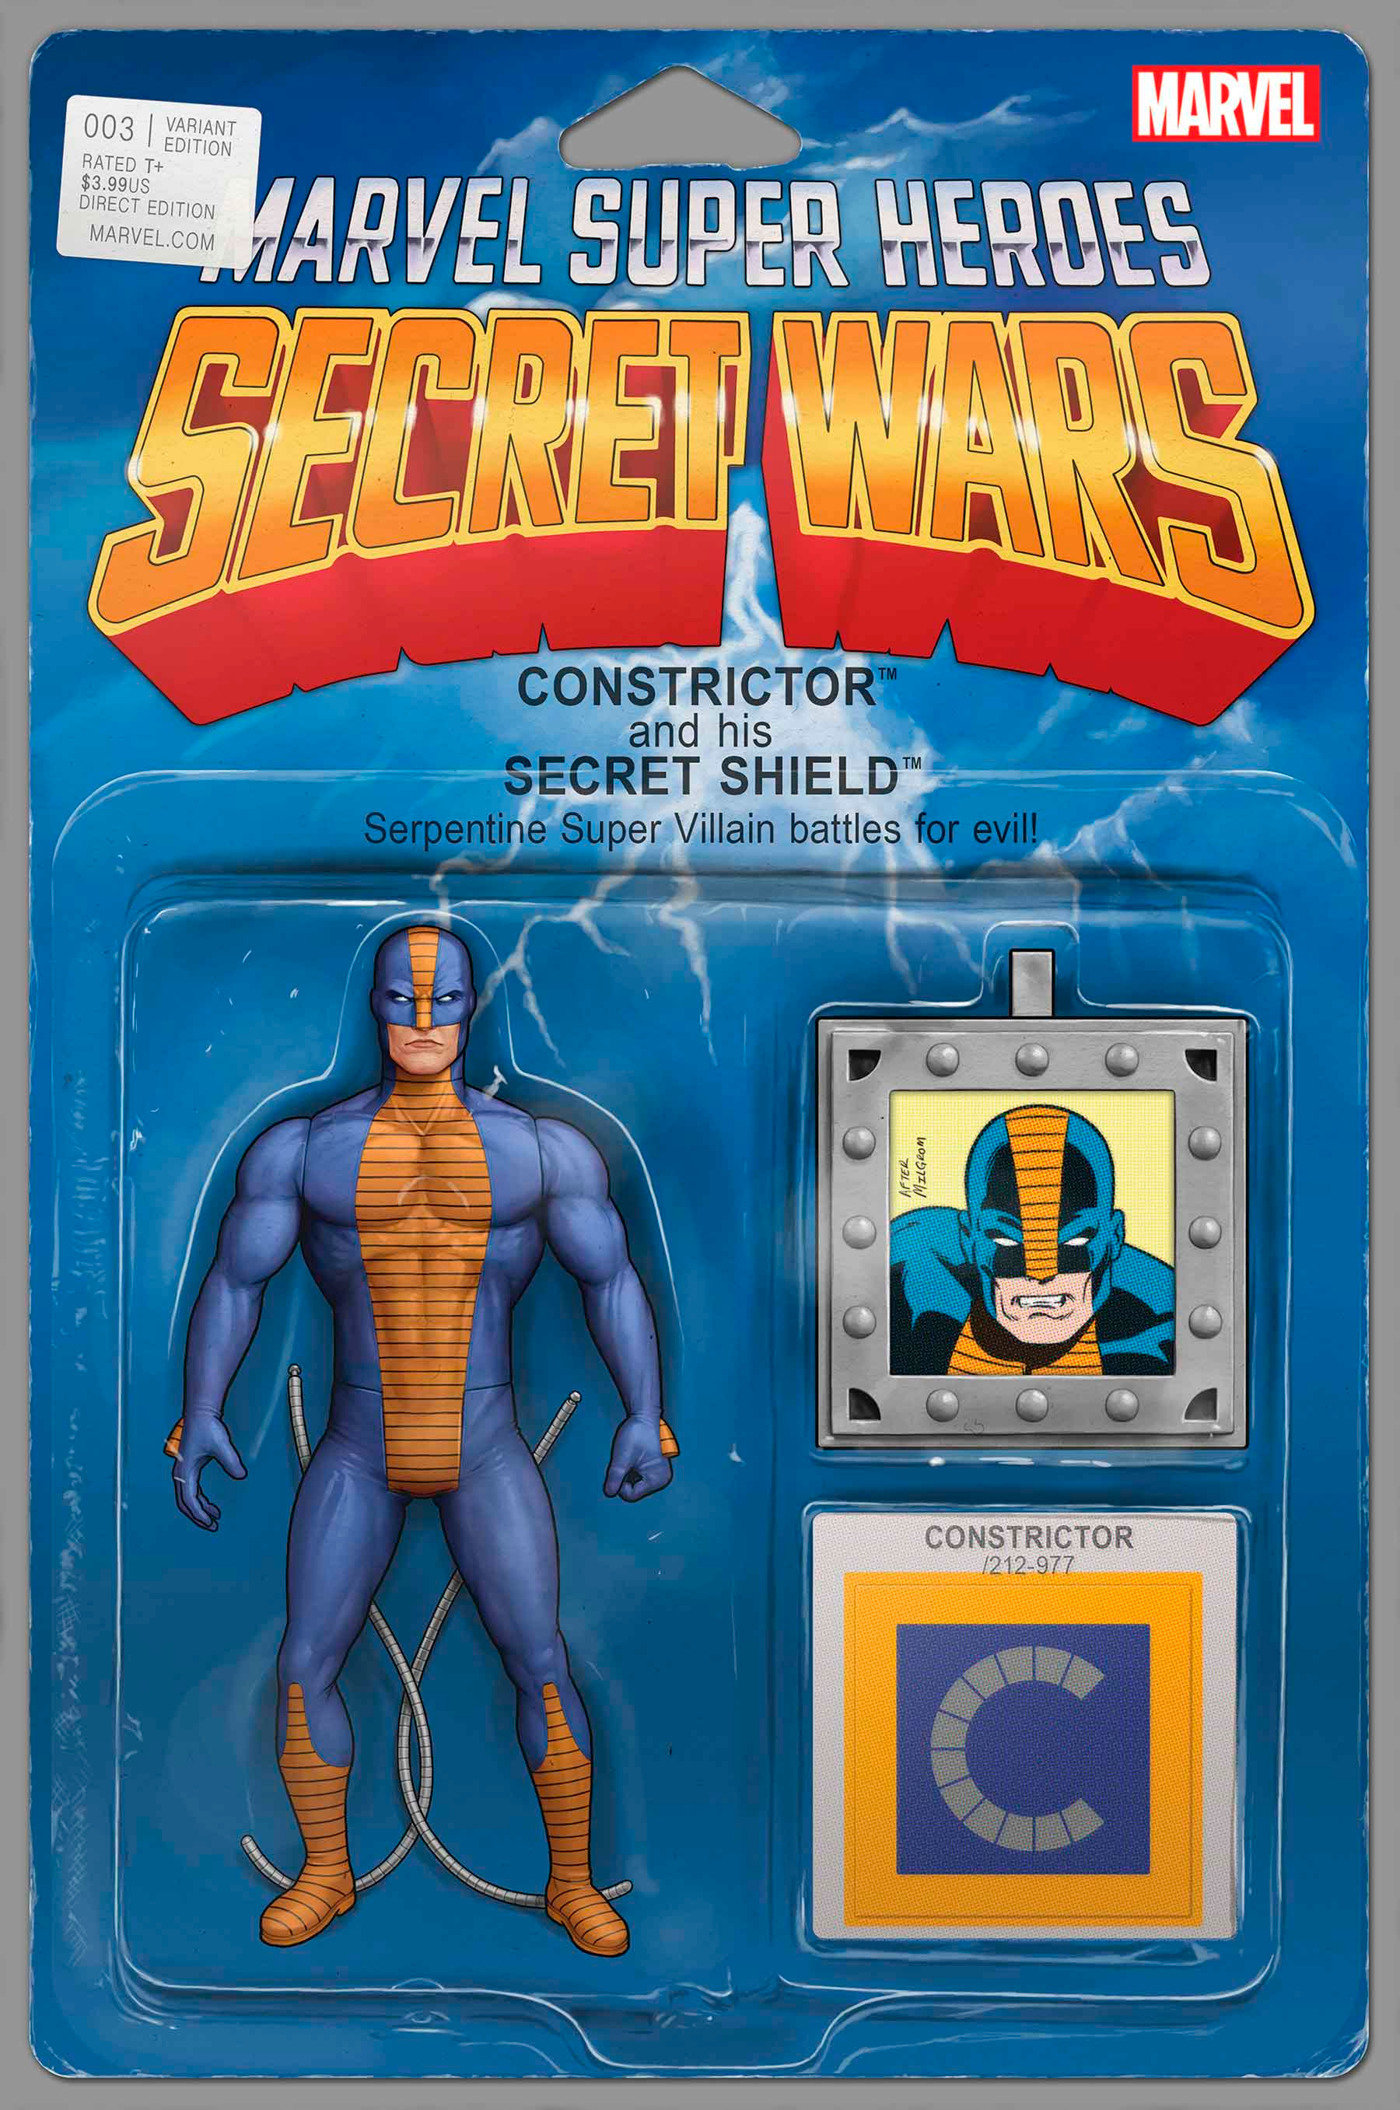 Marvel Super Heroes Secret Wars Battleworld #3 John Tyler Christopher Action Figure Variant